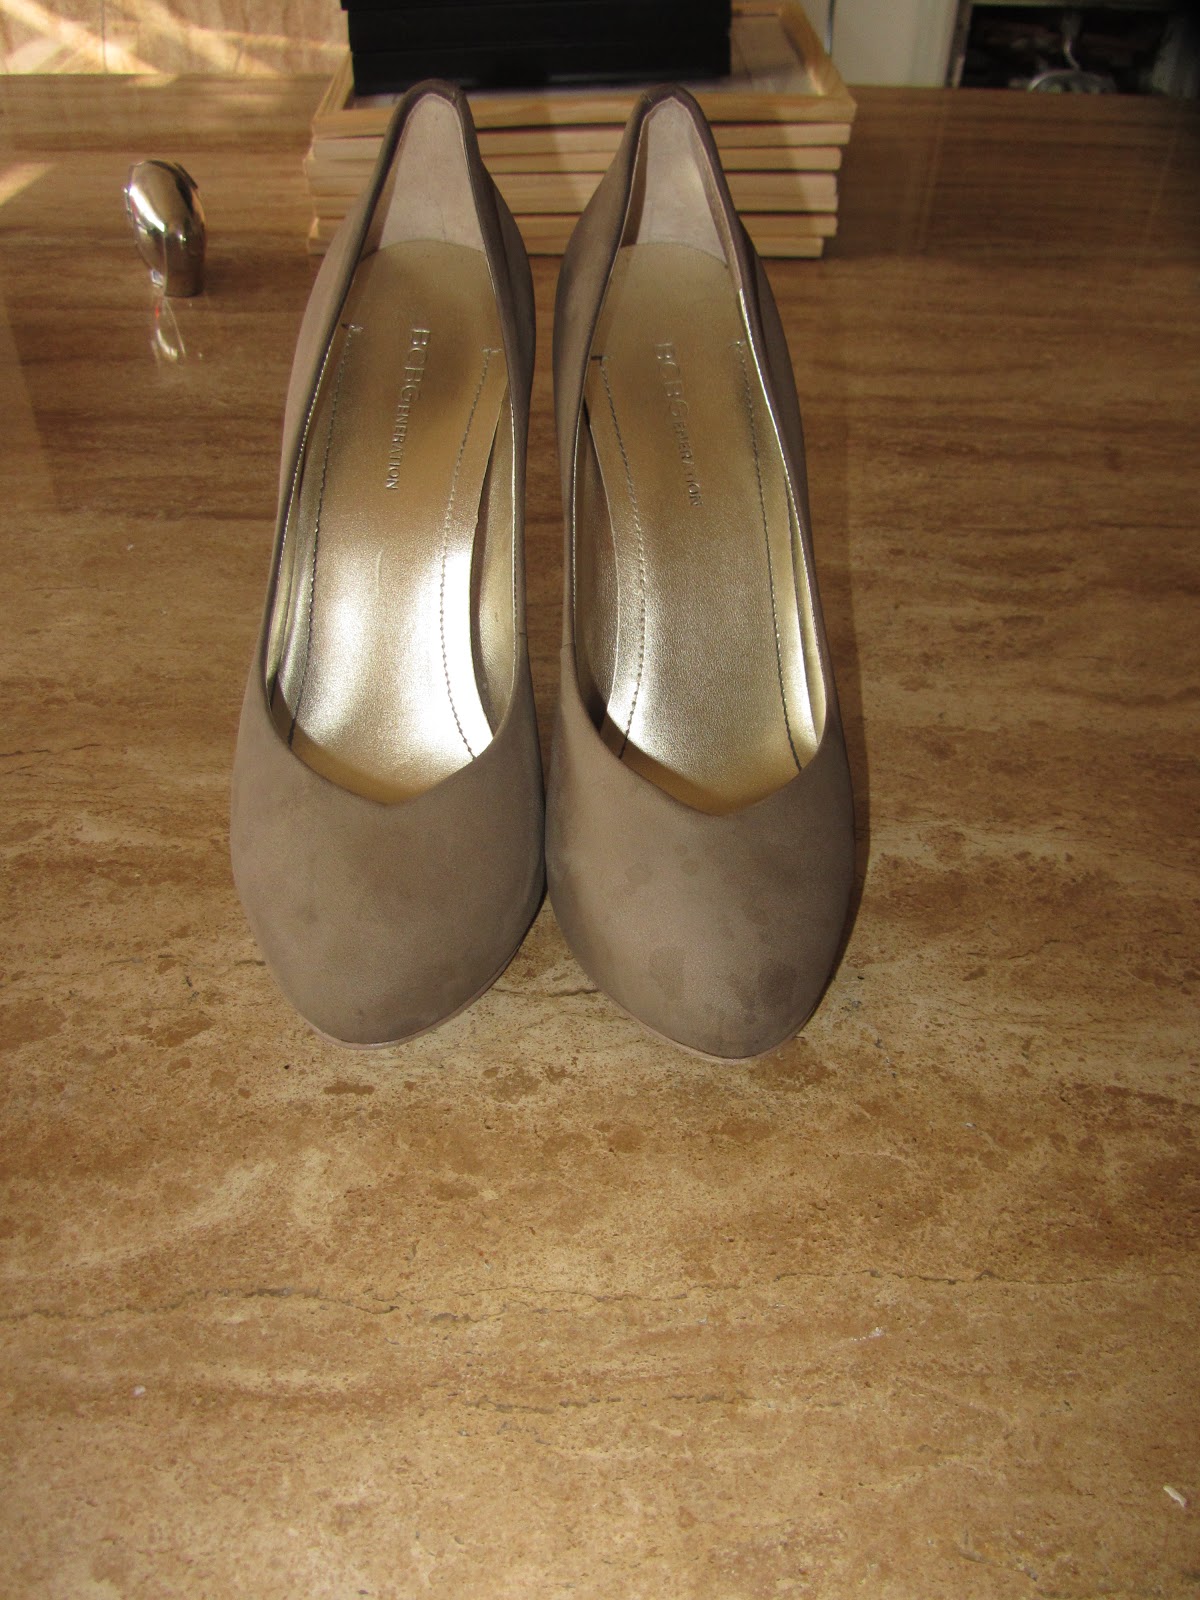 cleaning suede heels